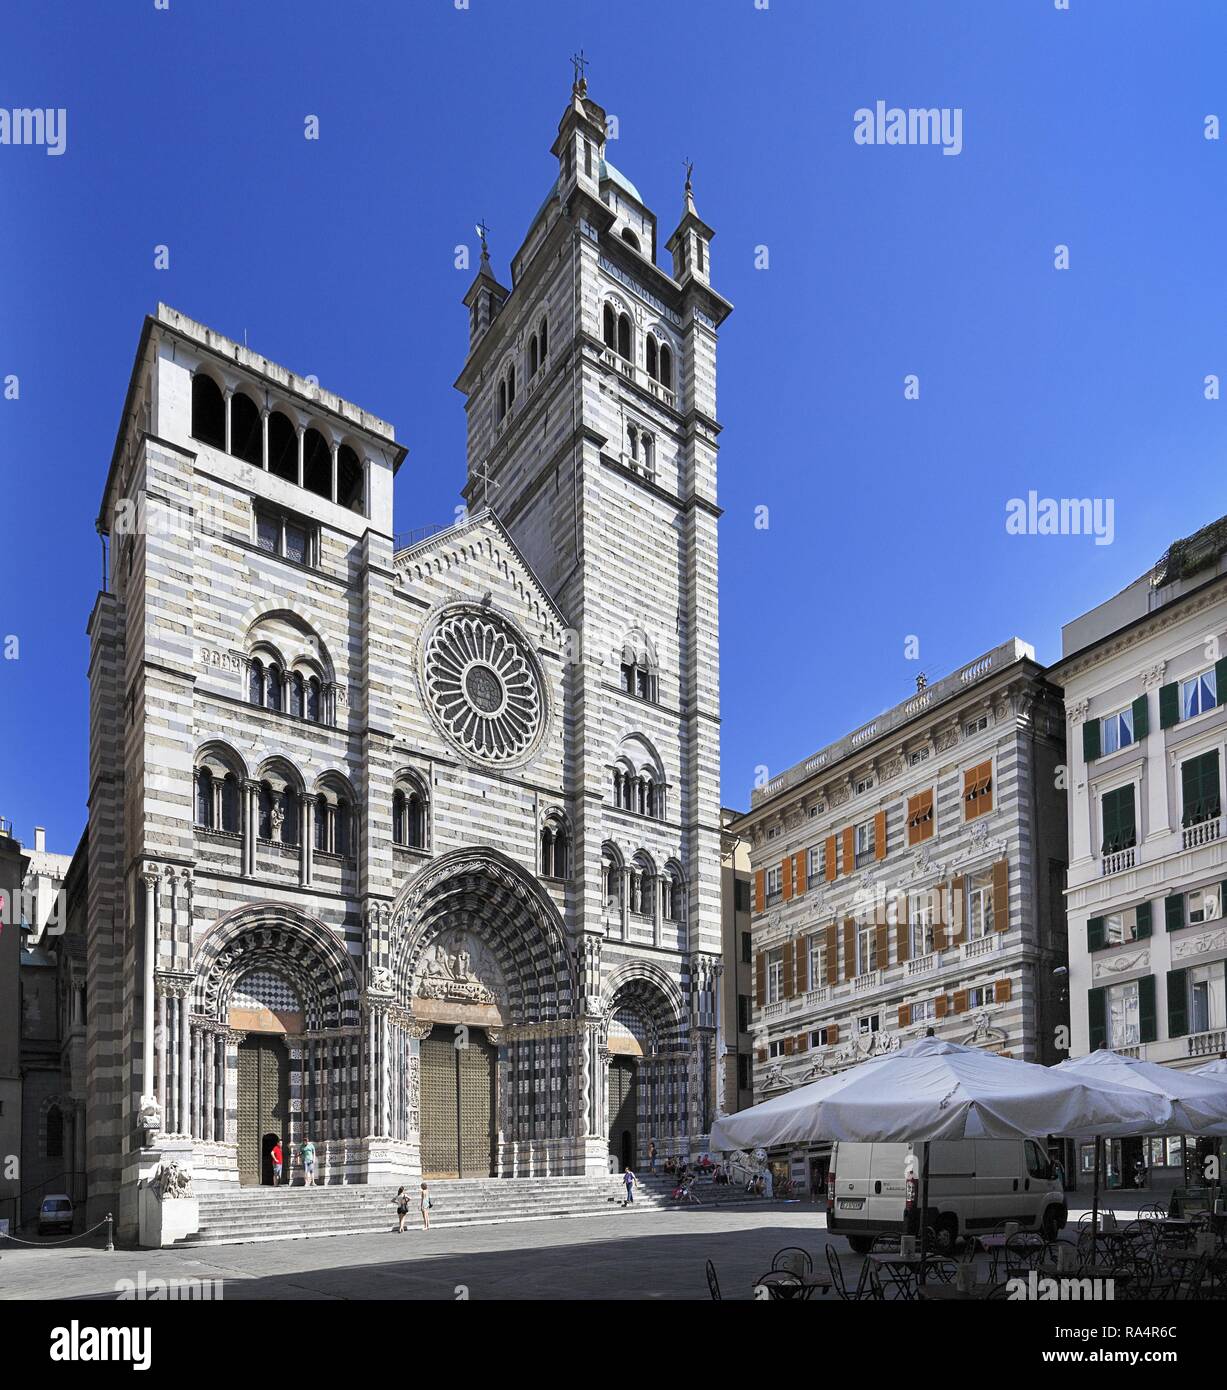 Wlochy - Ligurie - Gênes - Katedra San Lorenzo - Cattedrale di San Lorewnzo przy Via Tommaso Reggio Italie - Ligurie - Gênes - Gênes - Cathédrale Cathédrale de Saint Lawrence Banque D'Images